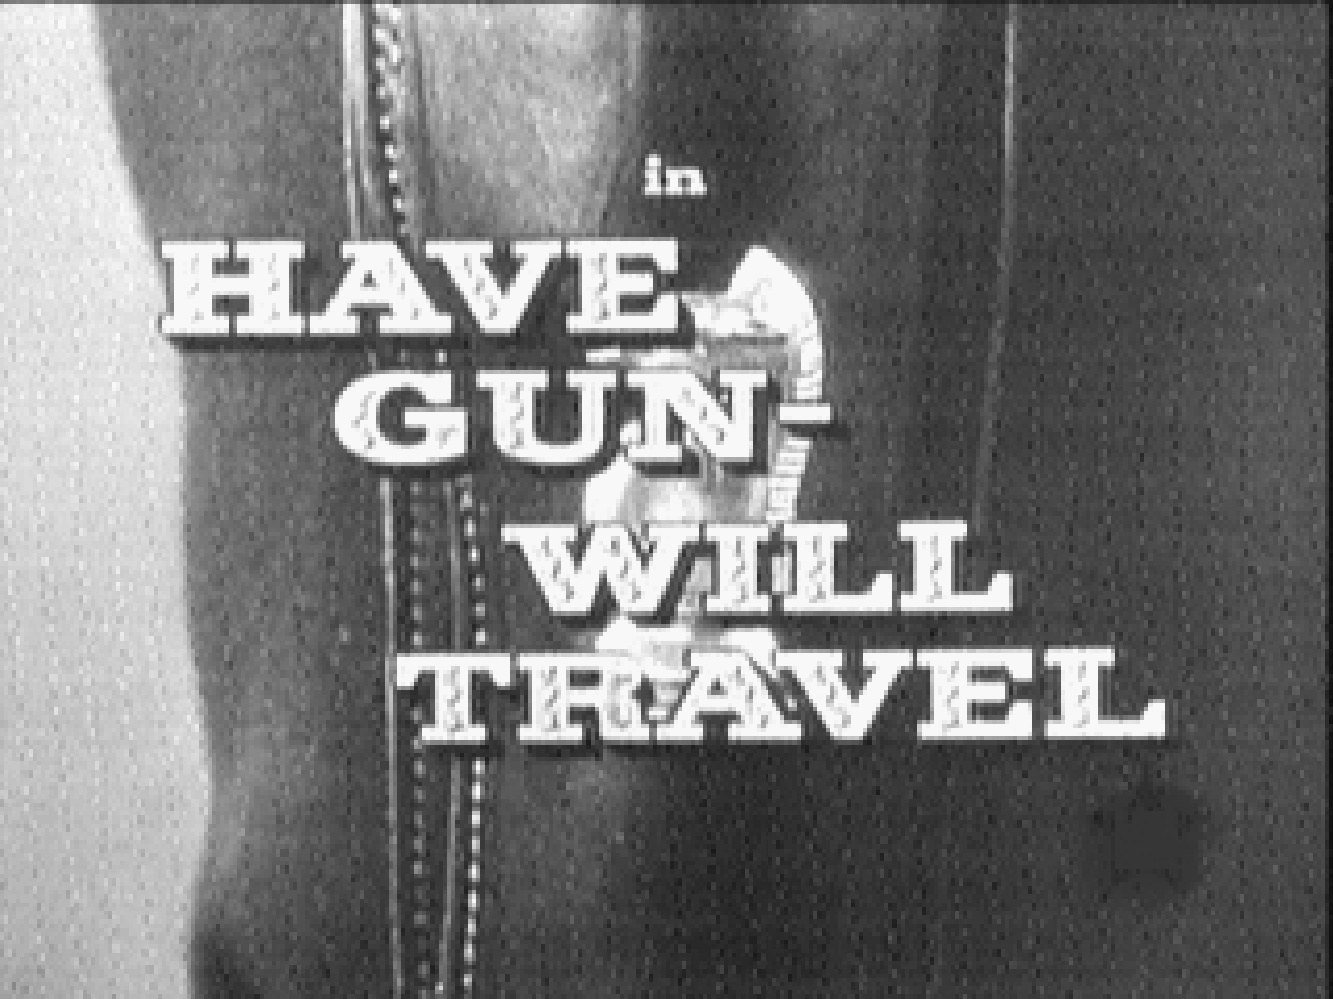 Have Gun - Will Travel - Season 5